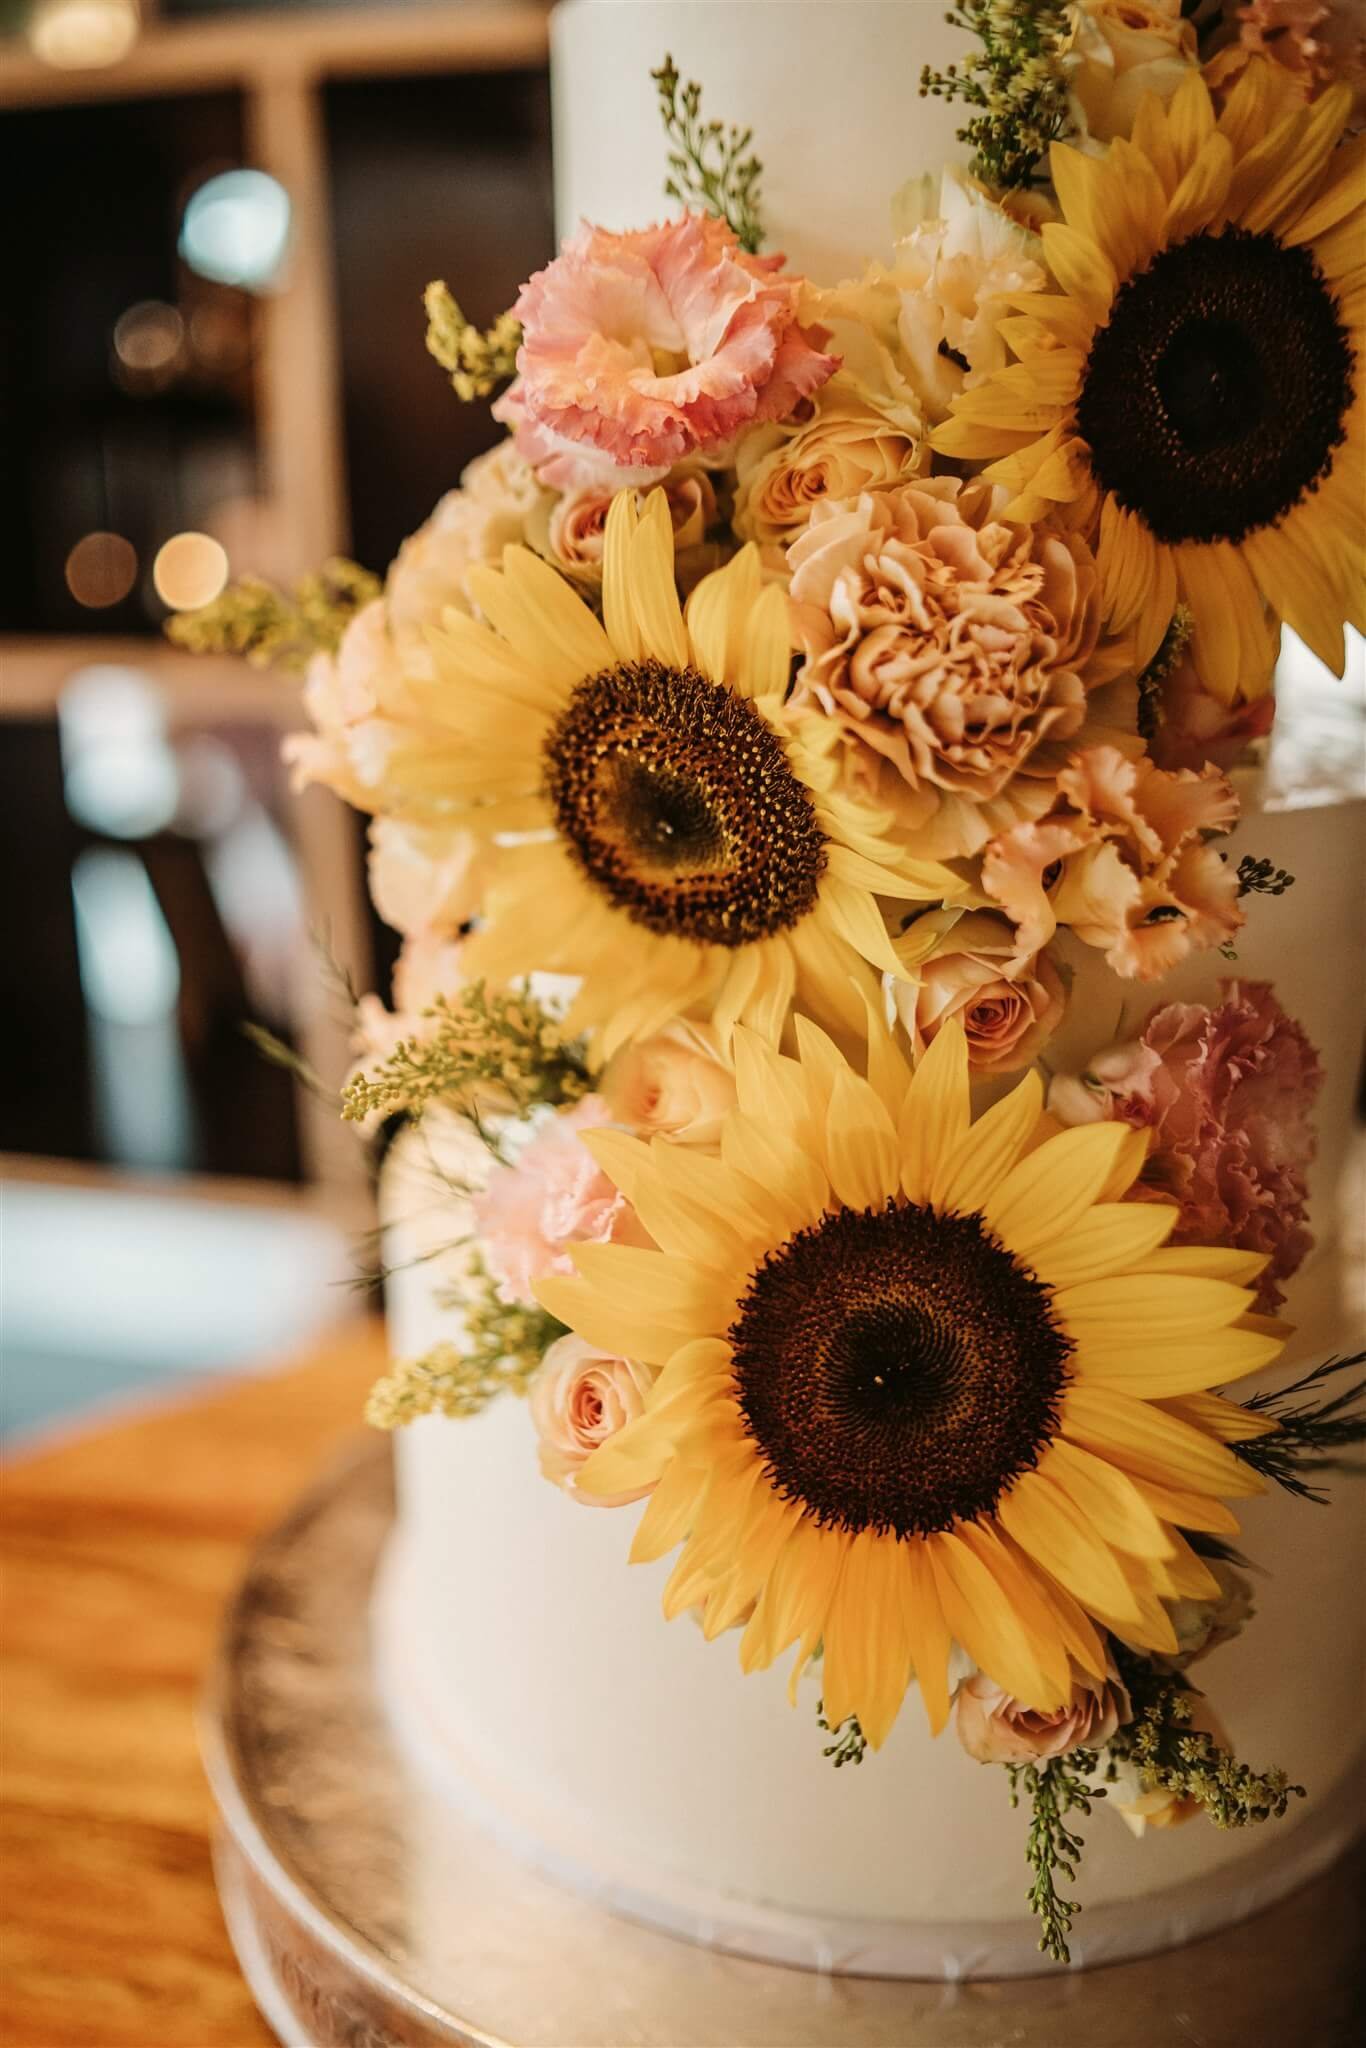 Wedding-cake-with-sunflowers.jpg